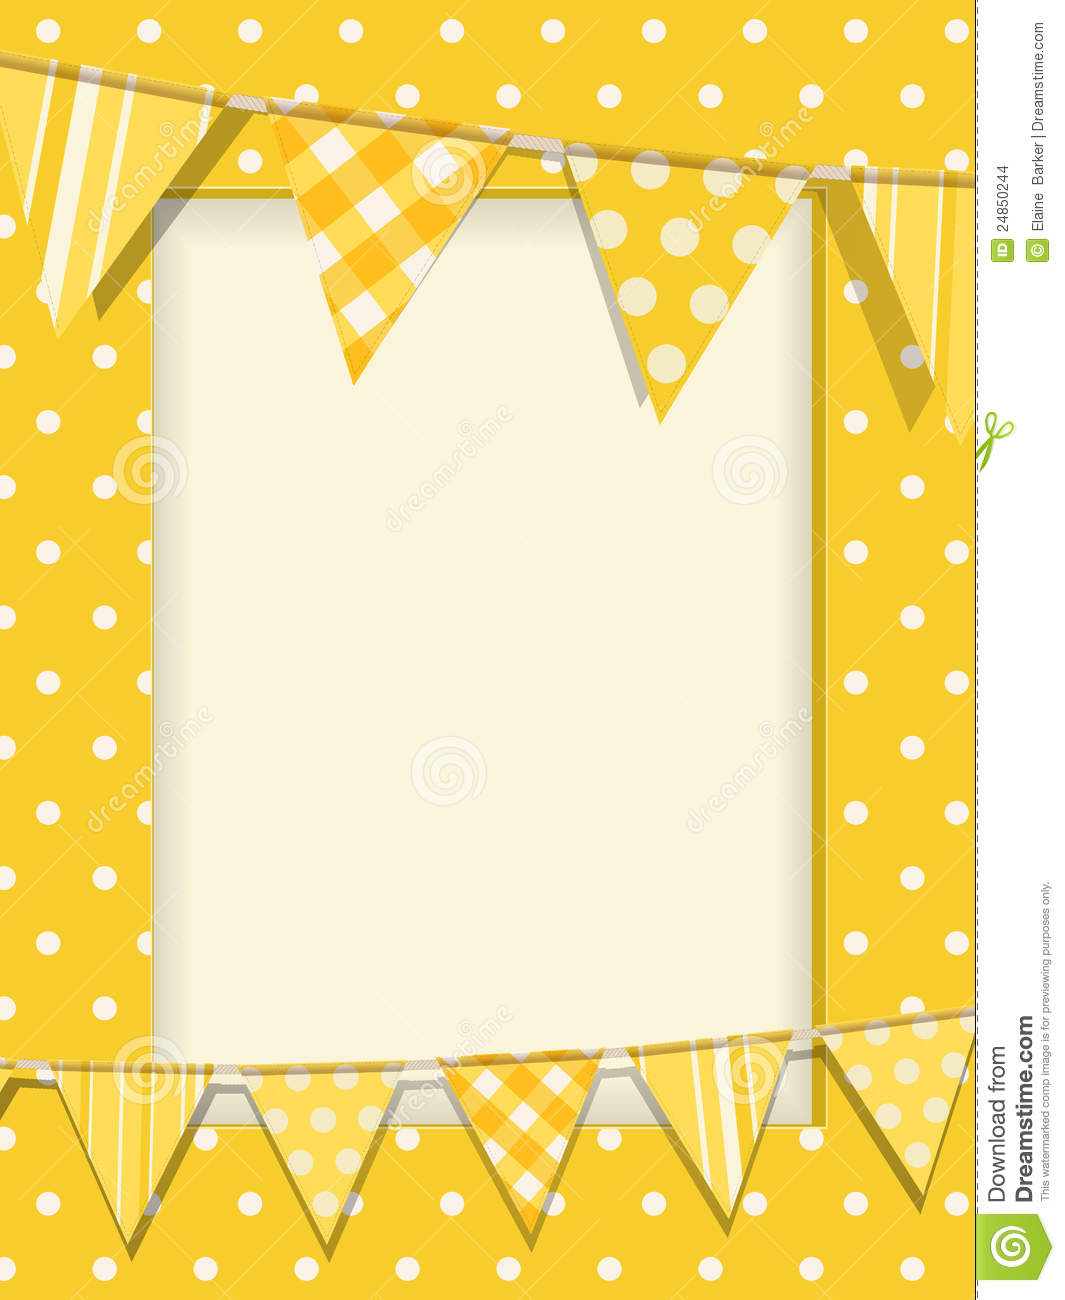 Bunting And Yellow Polka Dot Frame Stock Images   Image  24850244